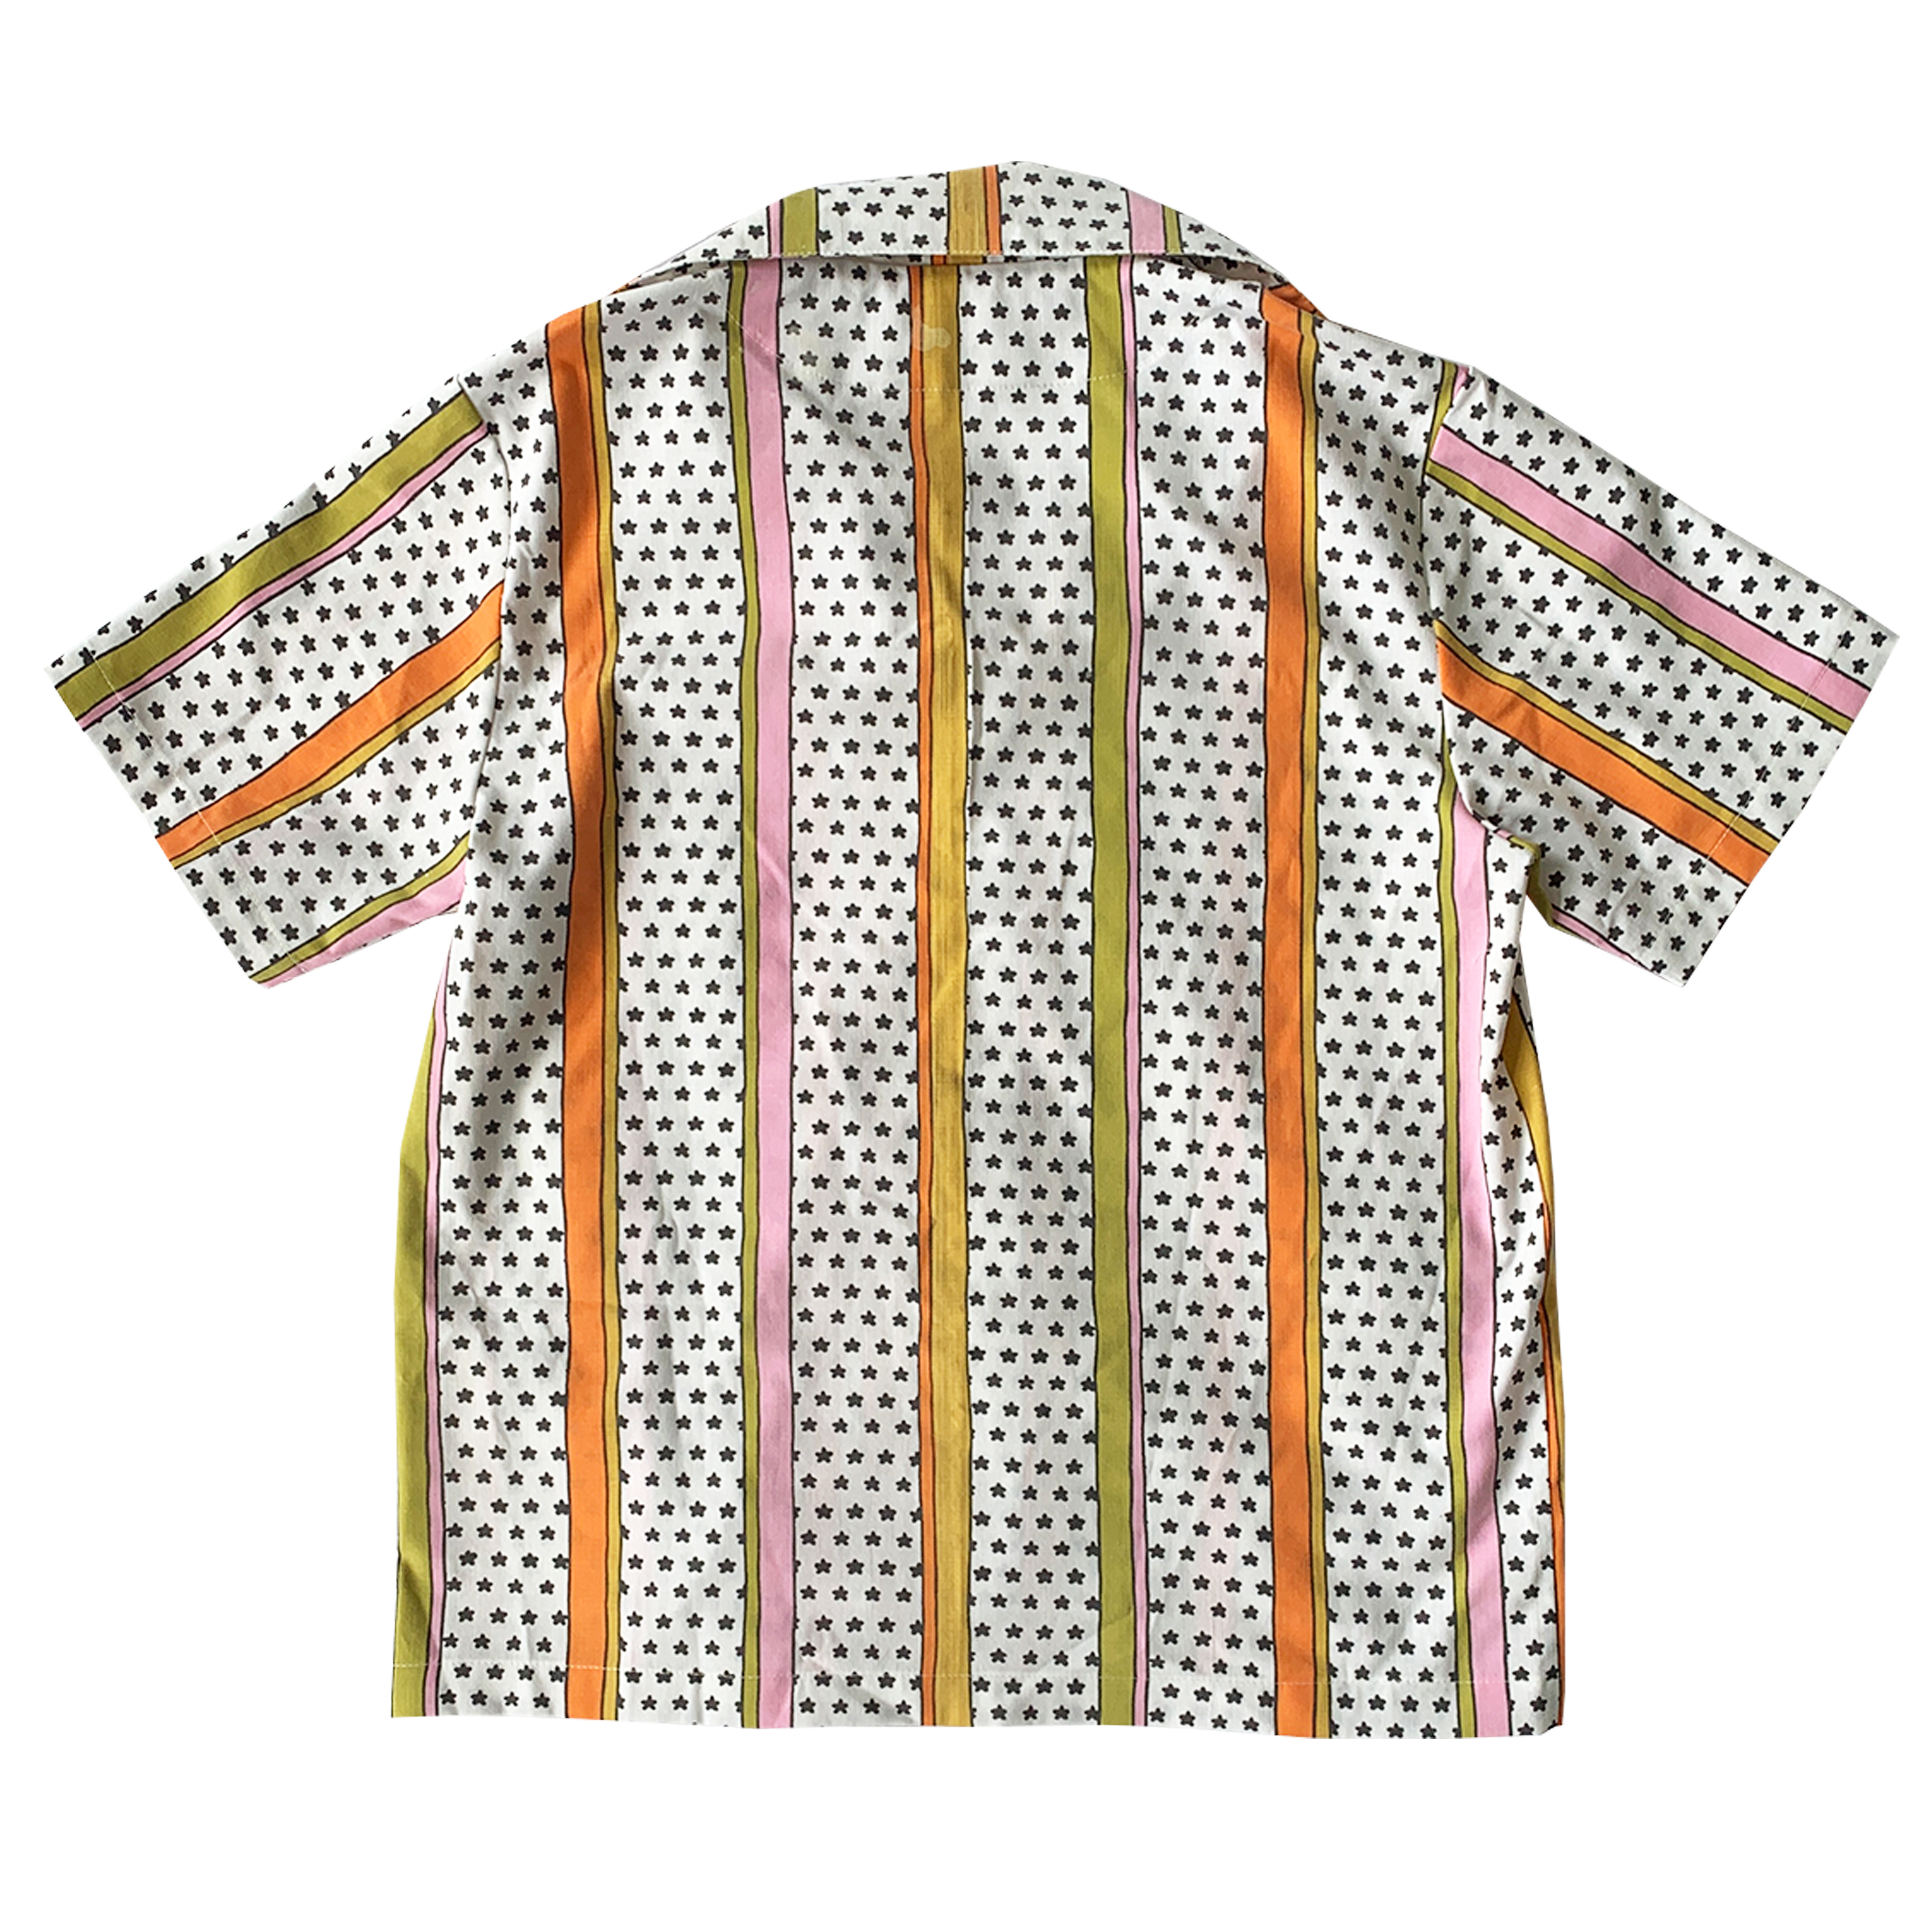 Summer Shirt- Star Stripe - Stewart Enslow